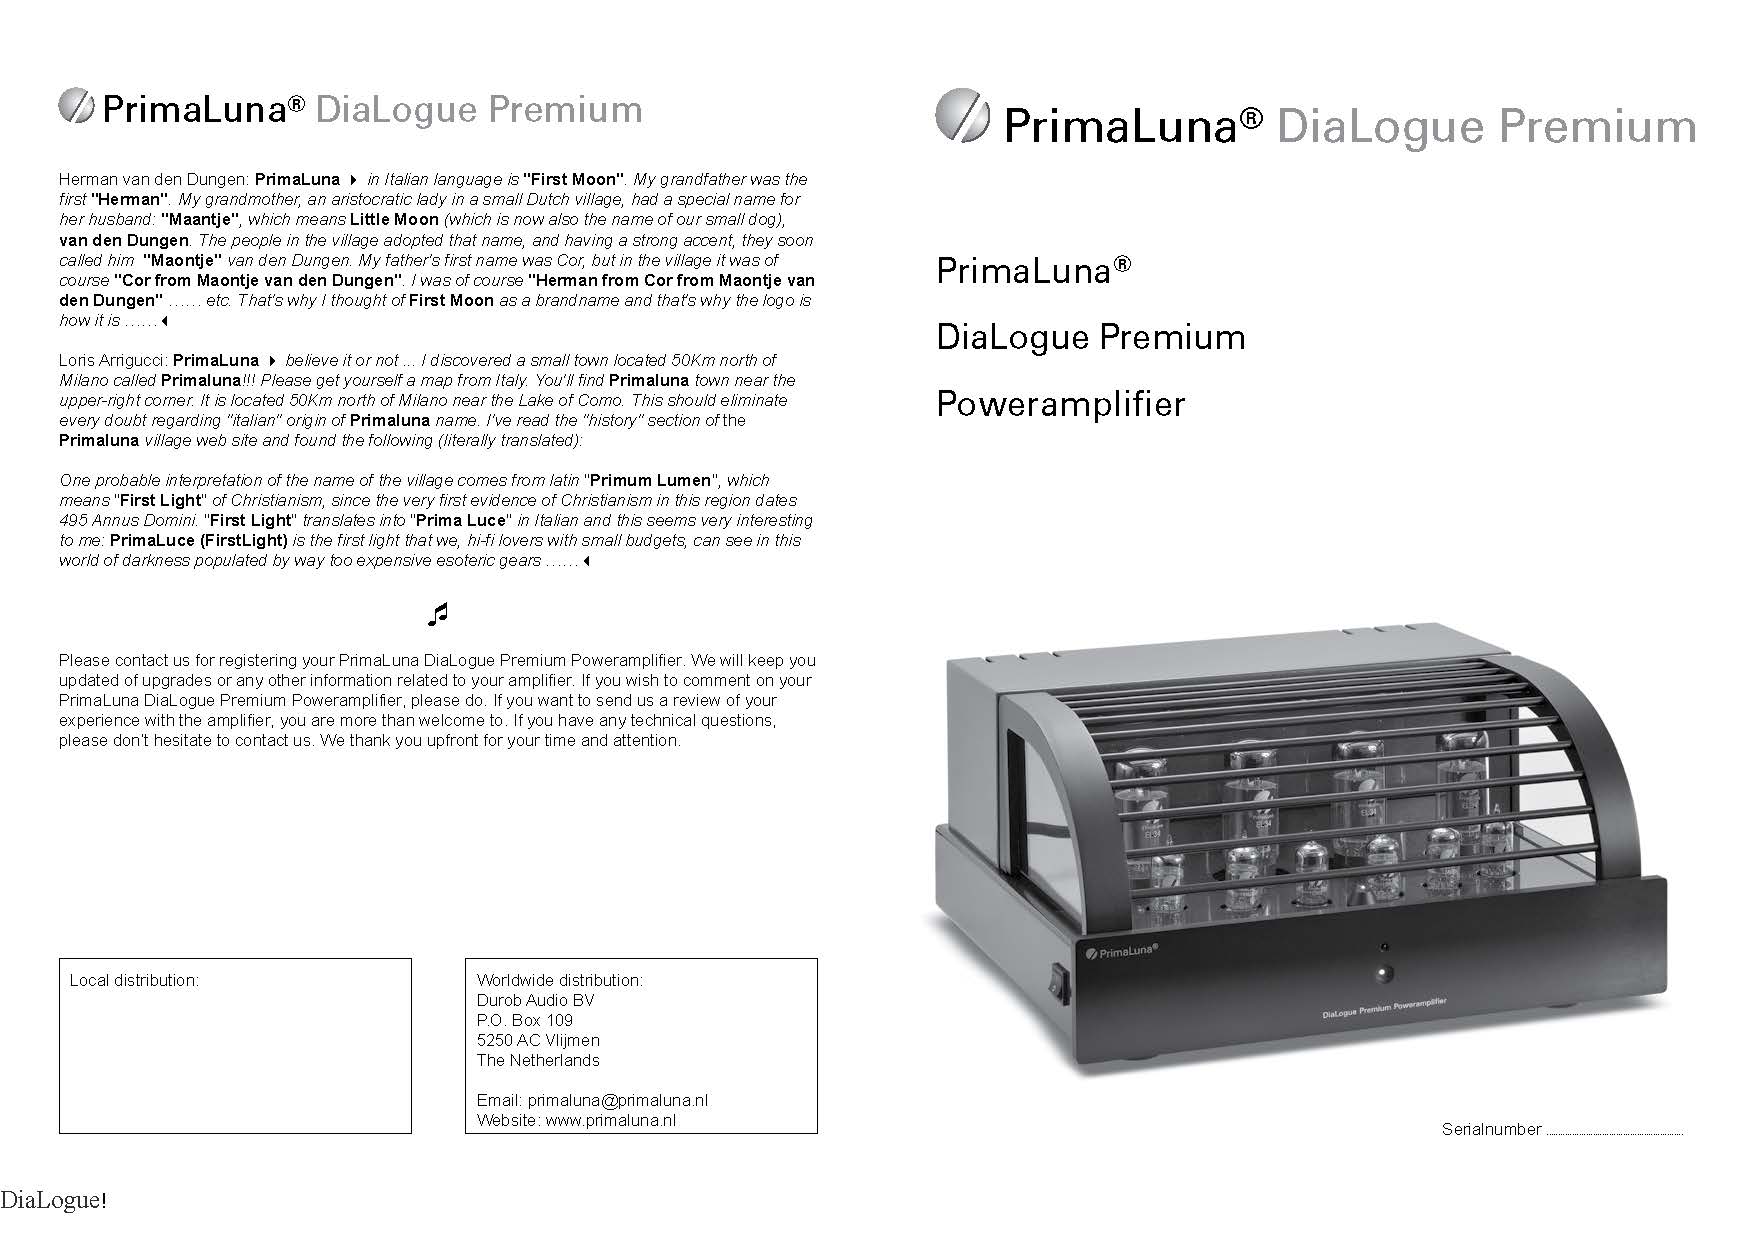 Primaluna DiaLogue Premium Power Amplifier User Manual - Norman Audio